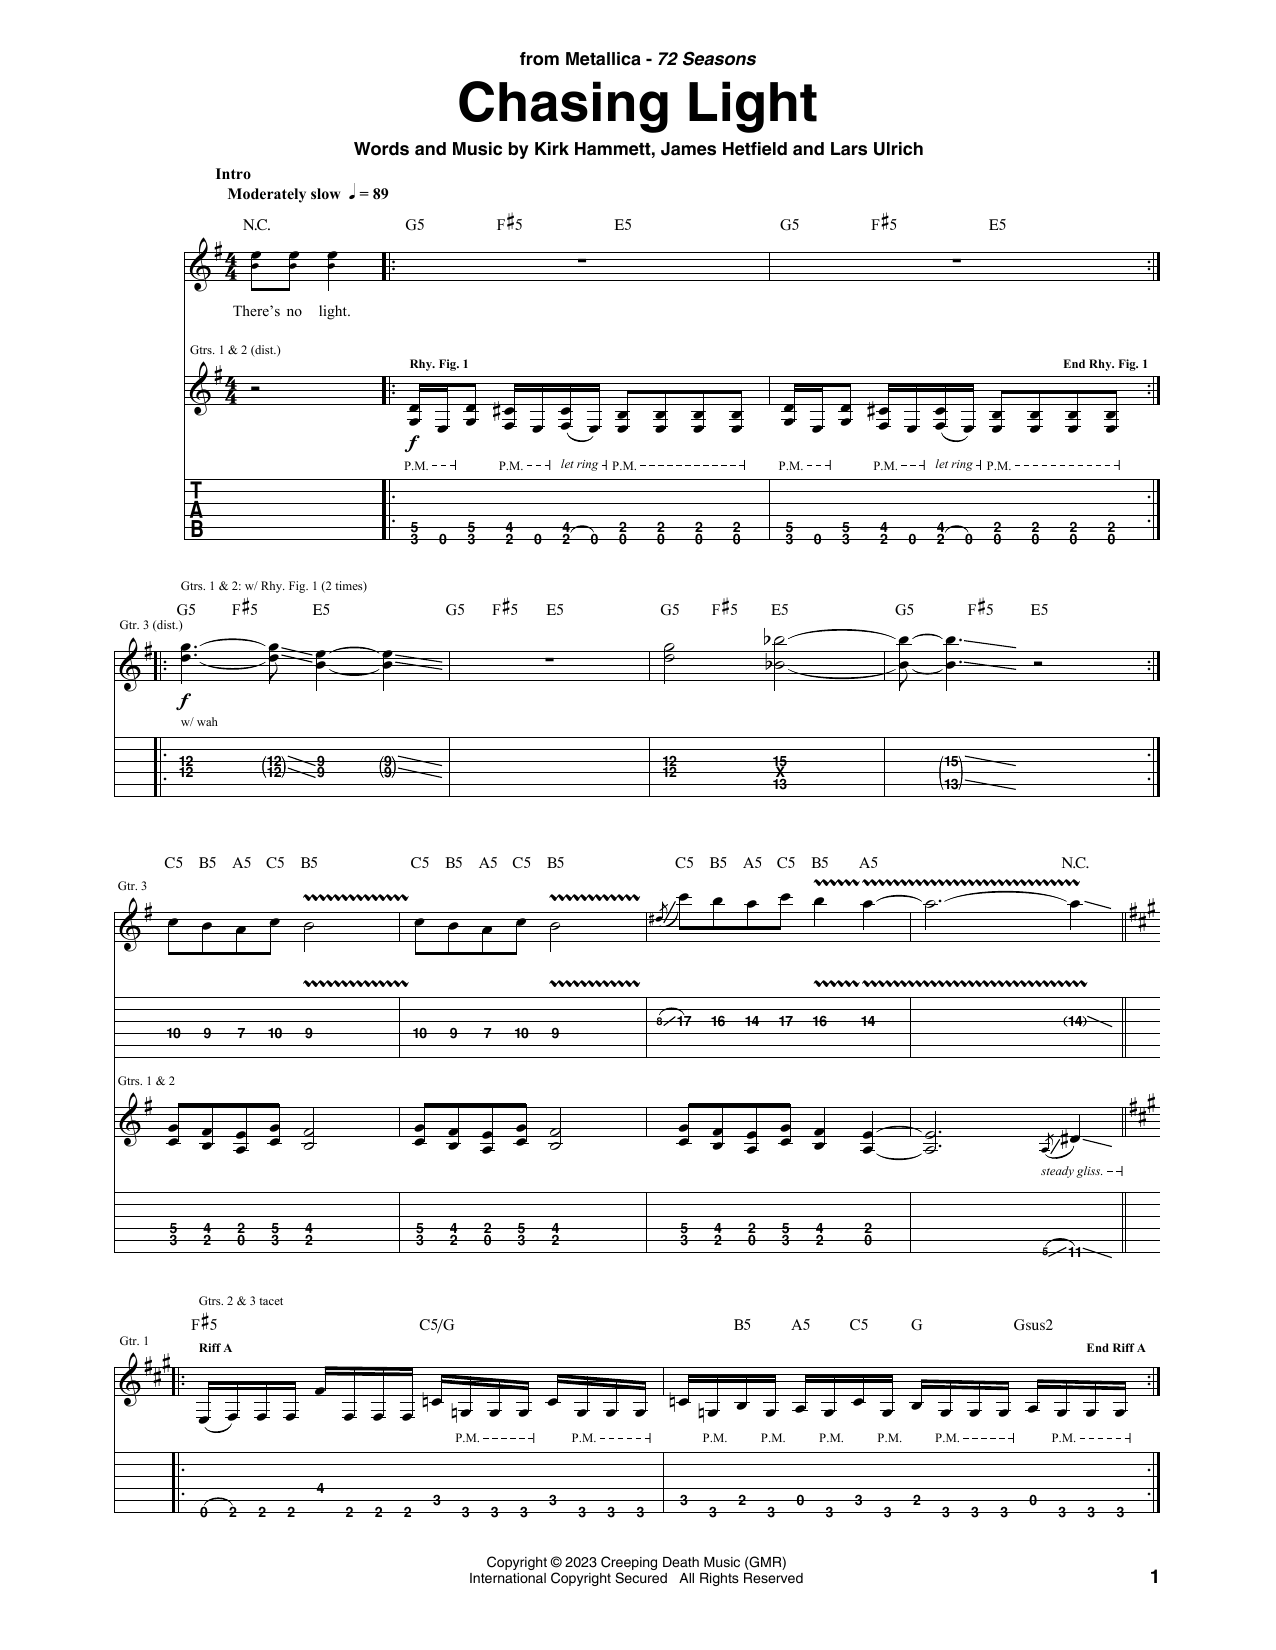 Metallica Chasing Light Sheet Music Notes & Chords for Guitar Tab - Download or Print PDF